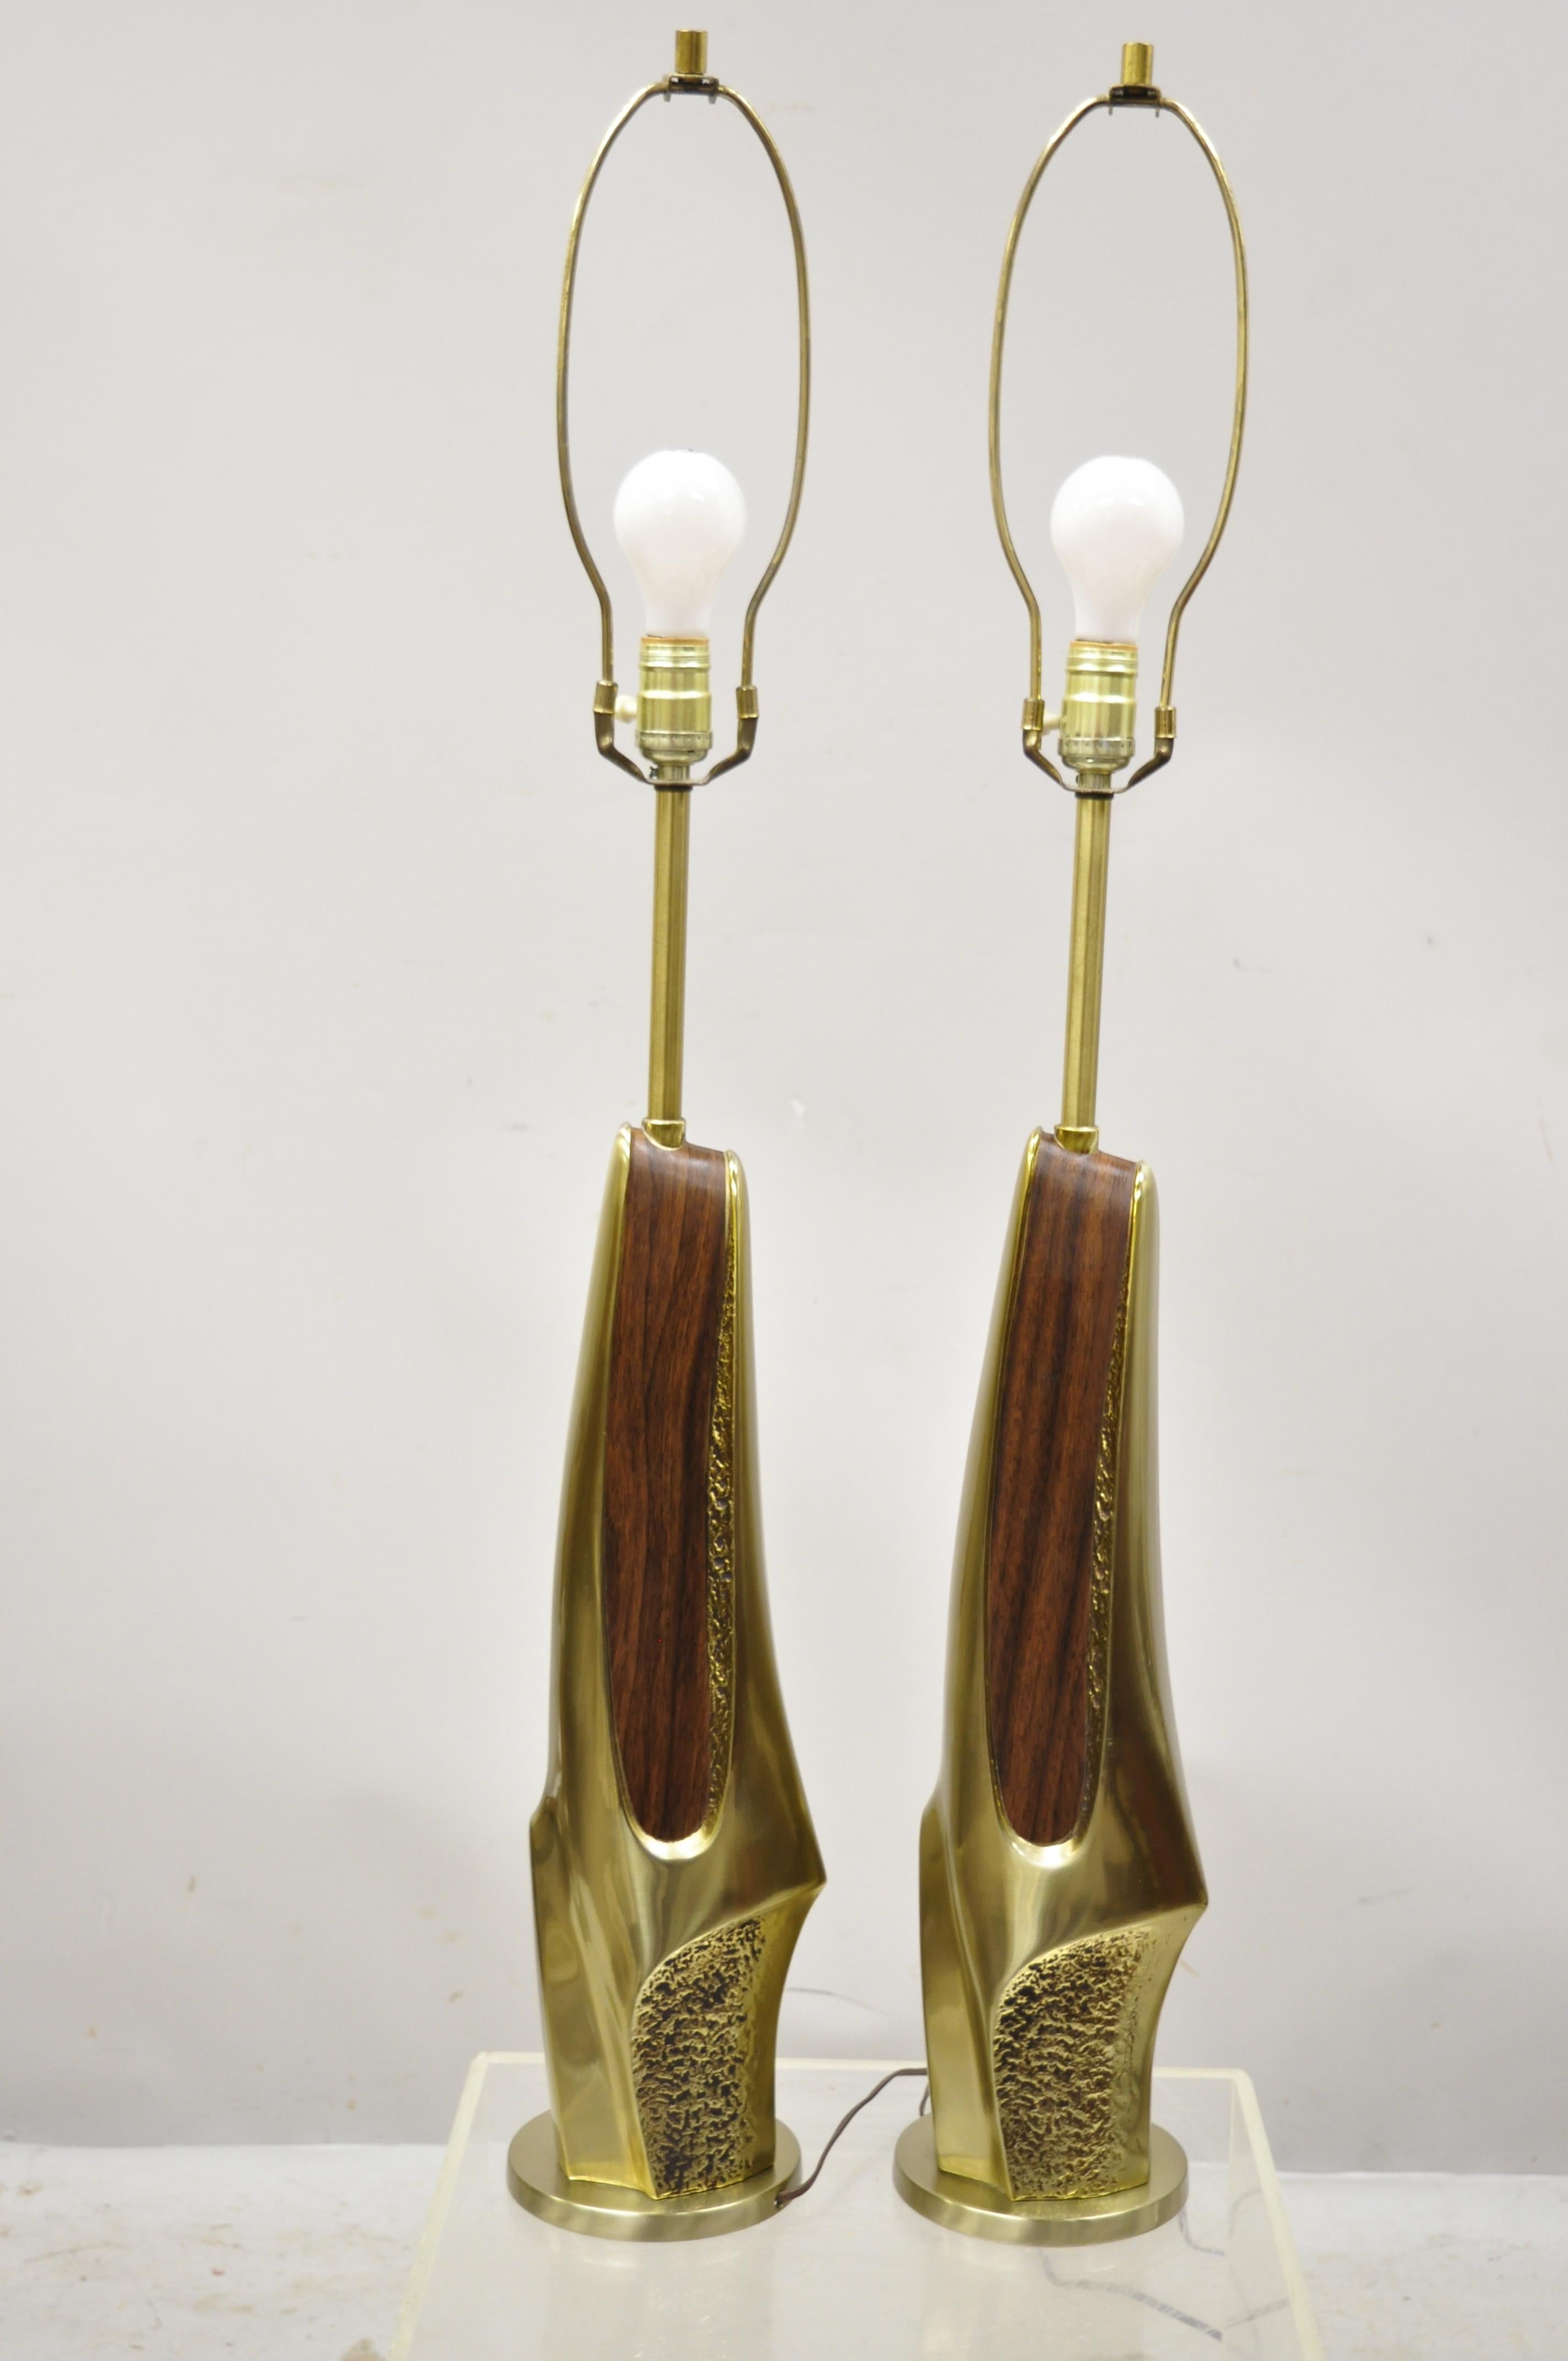 Laurel Midcentury Brutalist Modernist Brass Sculptural Table Lamps, a Pair For Sale 5